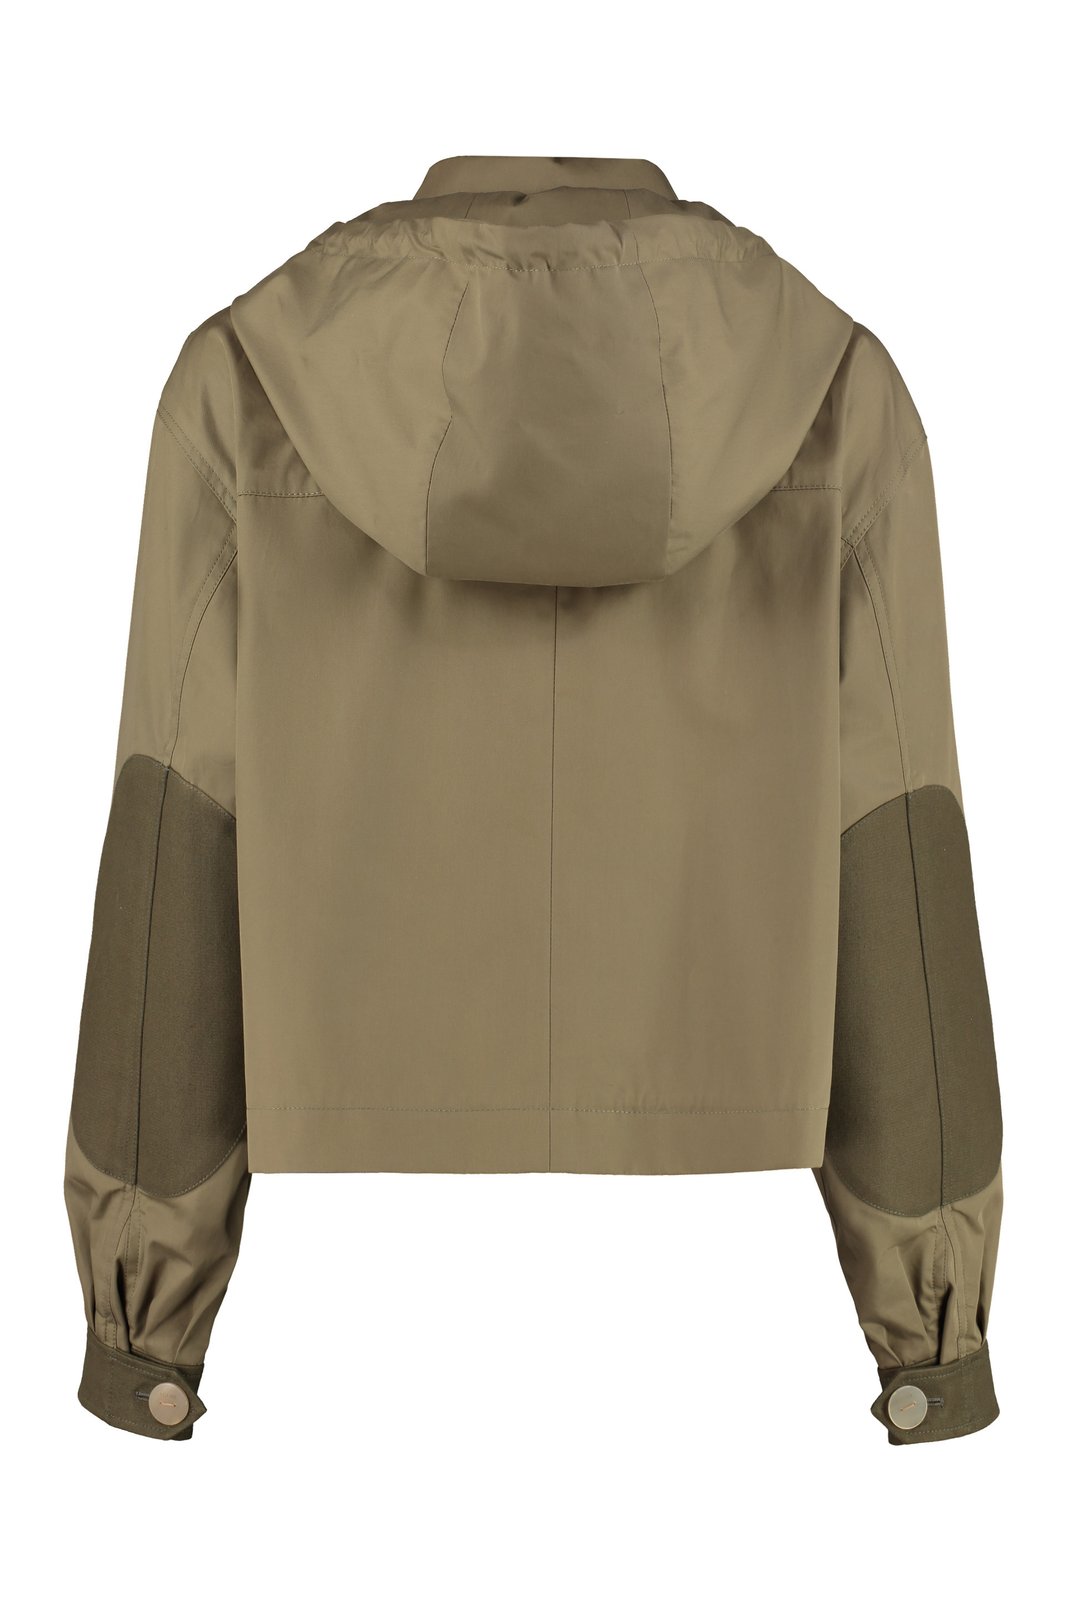 Loewe Drawstring Hooded Jacket